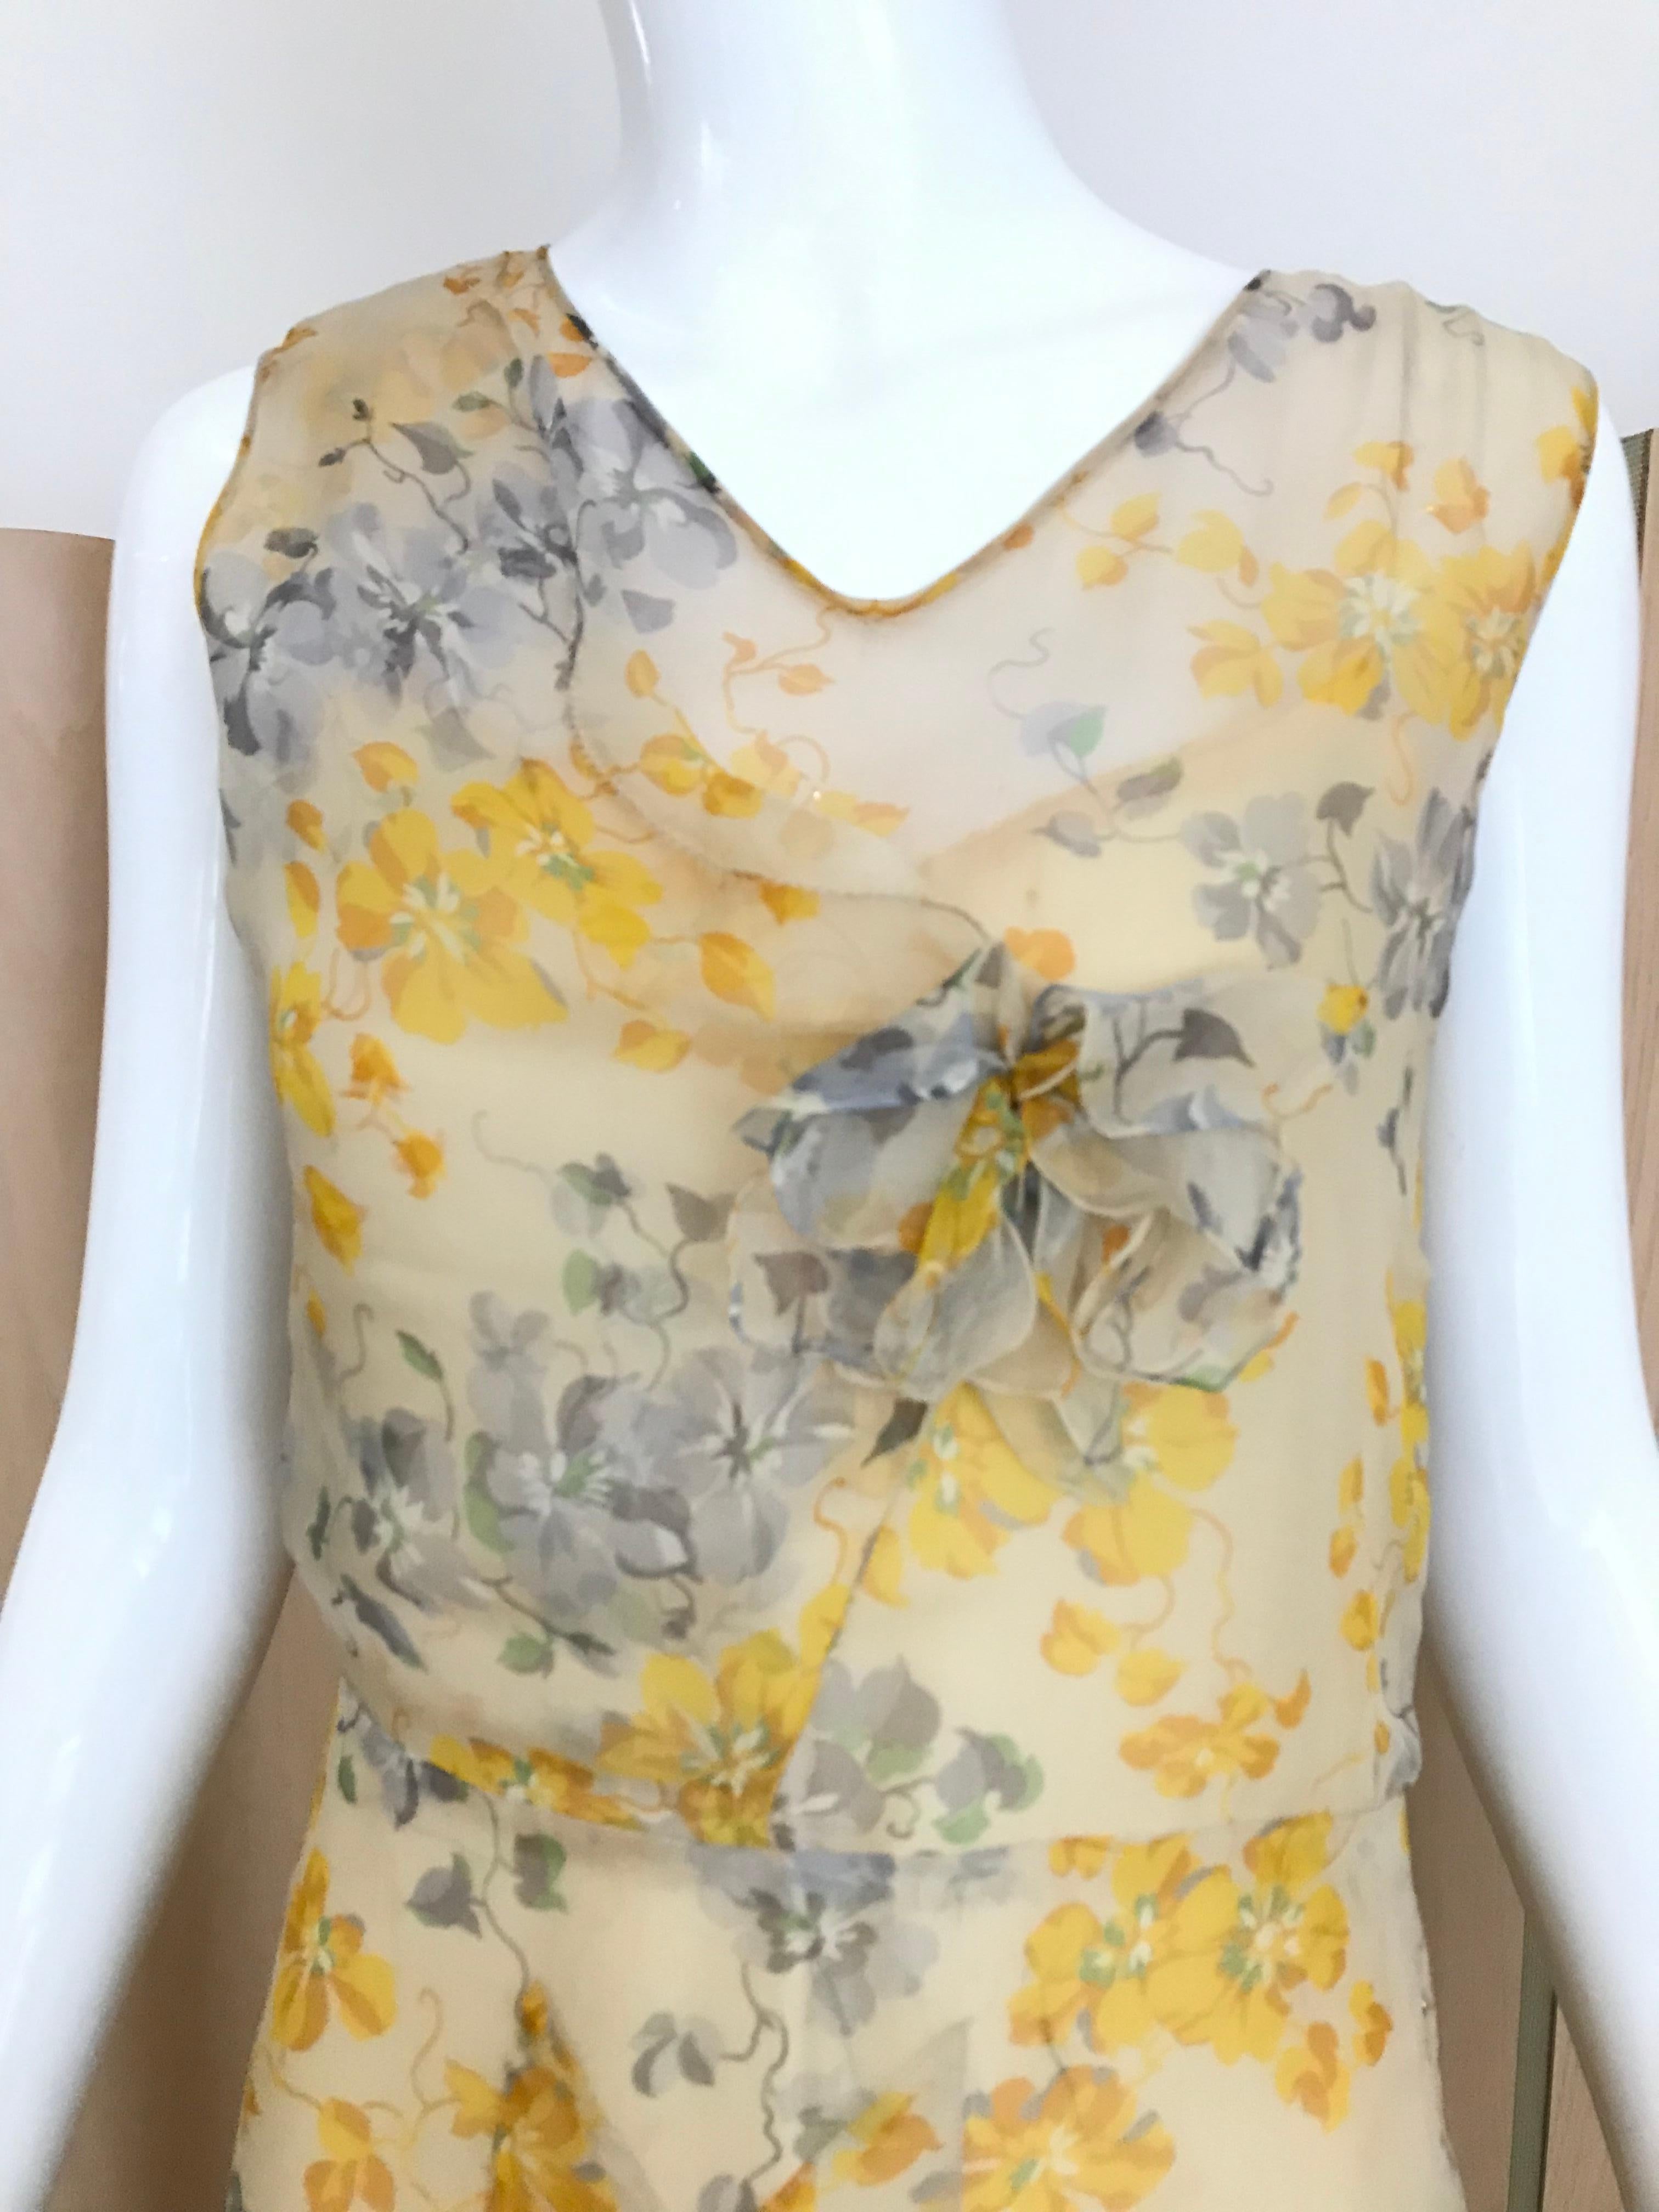 Beautiful silk chiffon 1930s sleeveless floral print dress in light yellow and grey print.
Size: 4